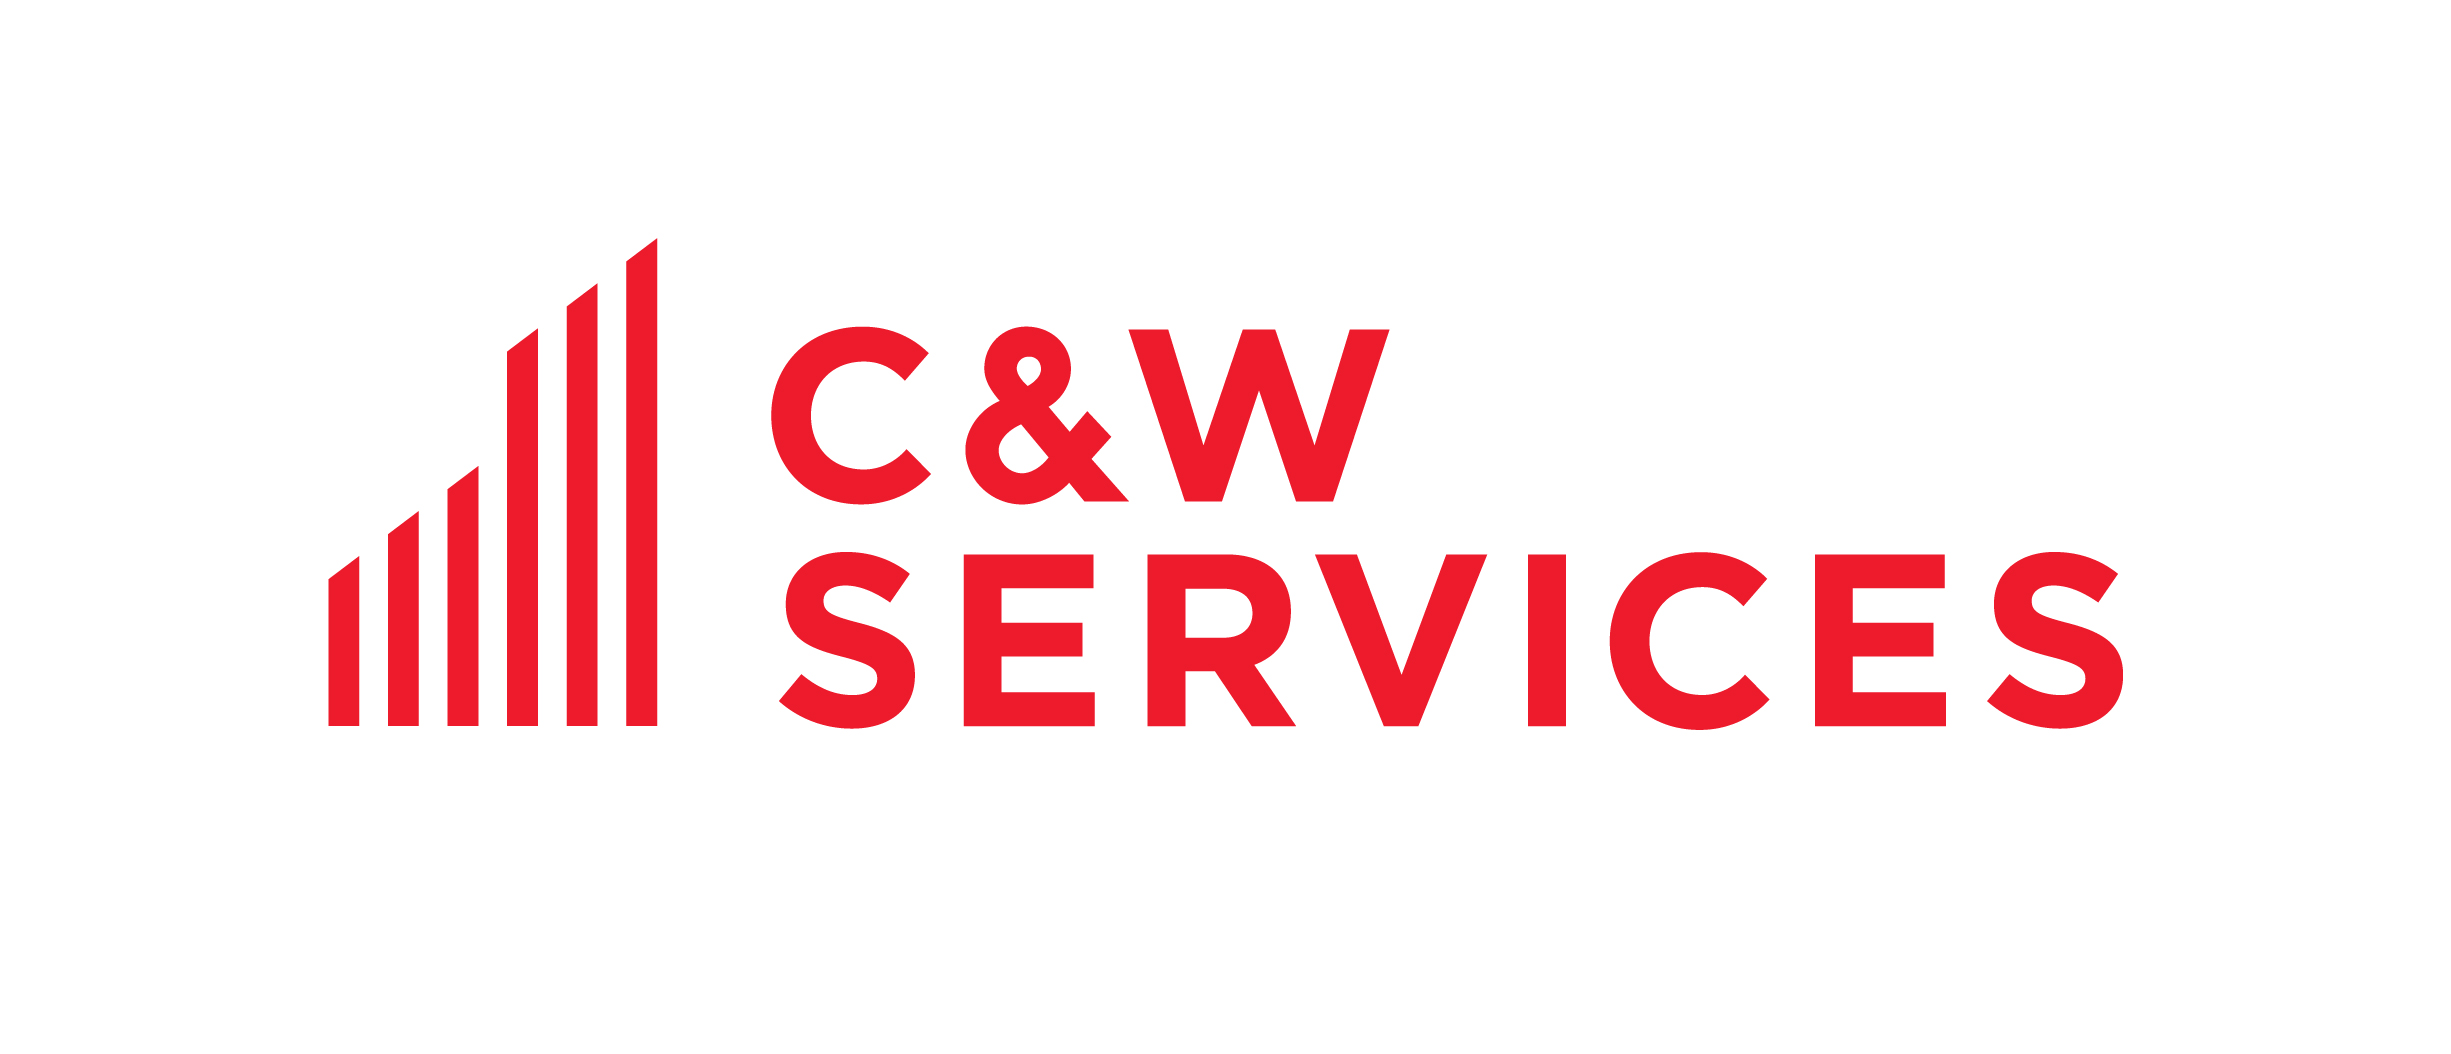 C&W Services - CPM Specialty Skills Development Audit